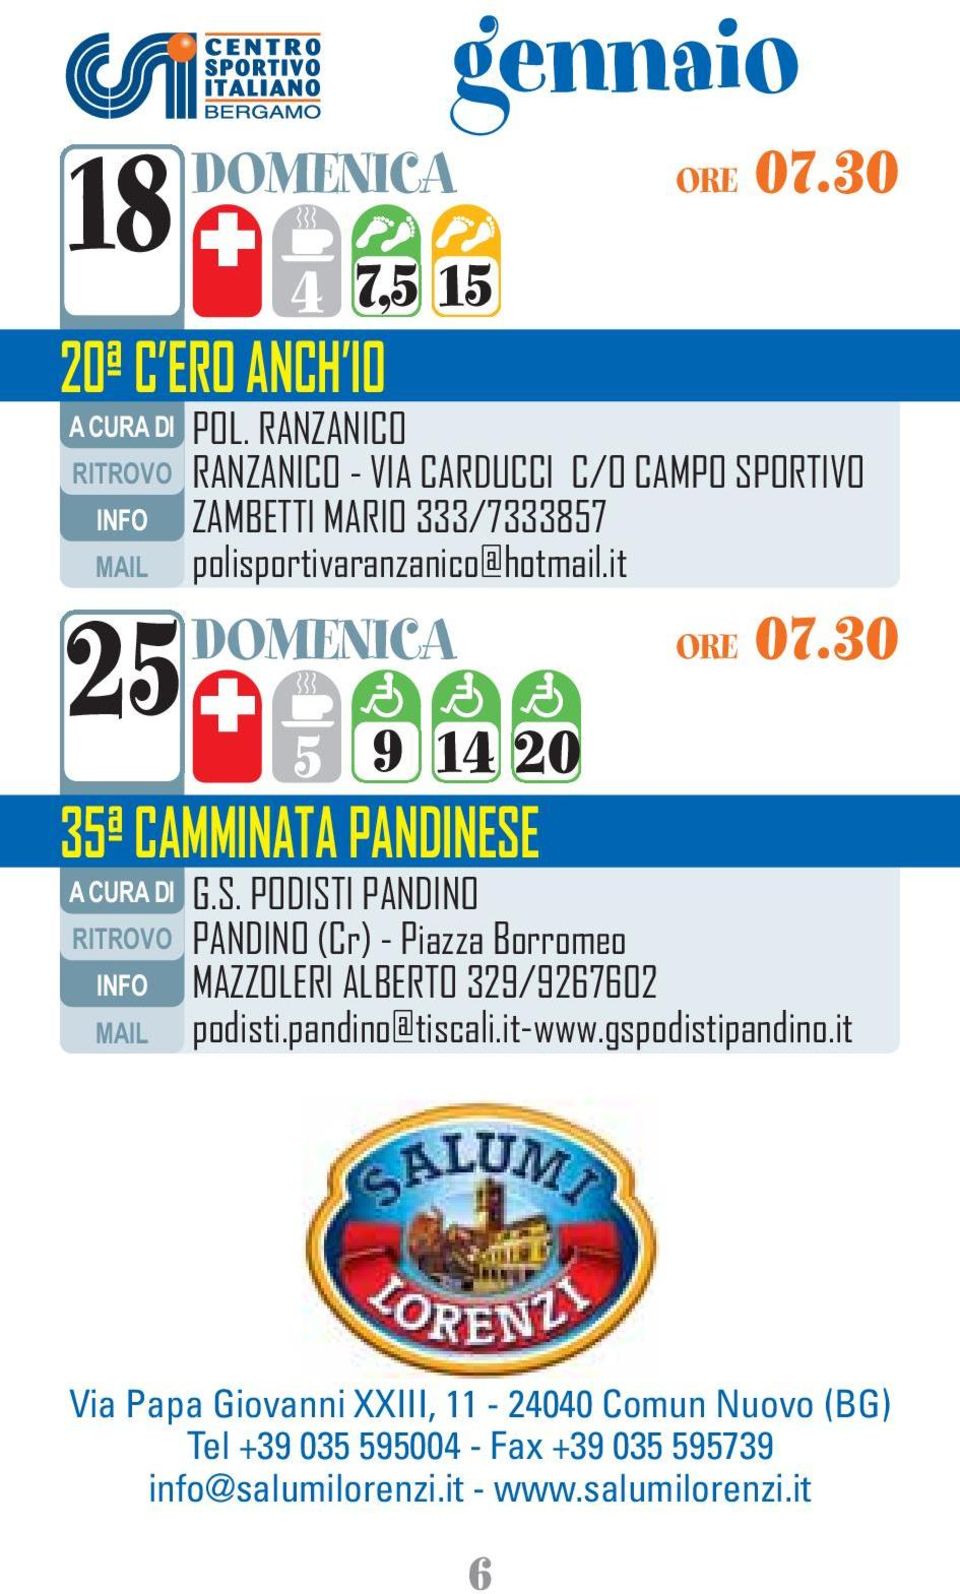 S. PODISTI PANDINO PANDINO (Cr) - Piazza Borromeo MAZZOLERI ALBERTO 329/9267602 podisti.pandino@tiscali.it-www.